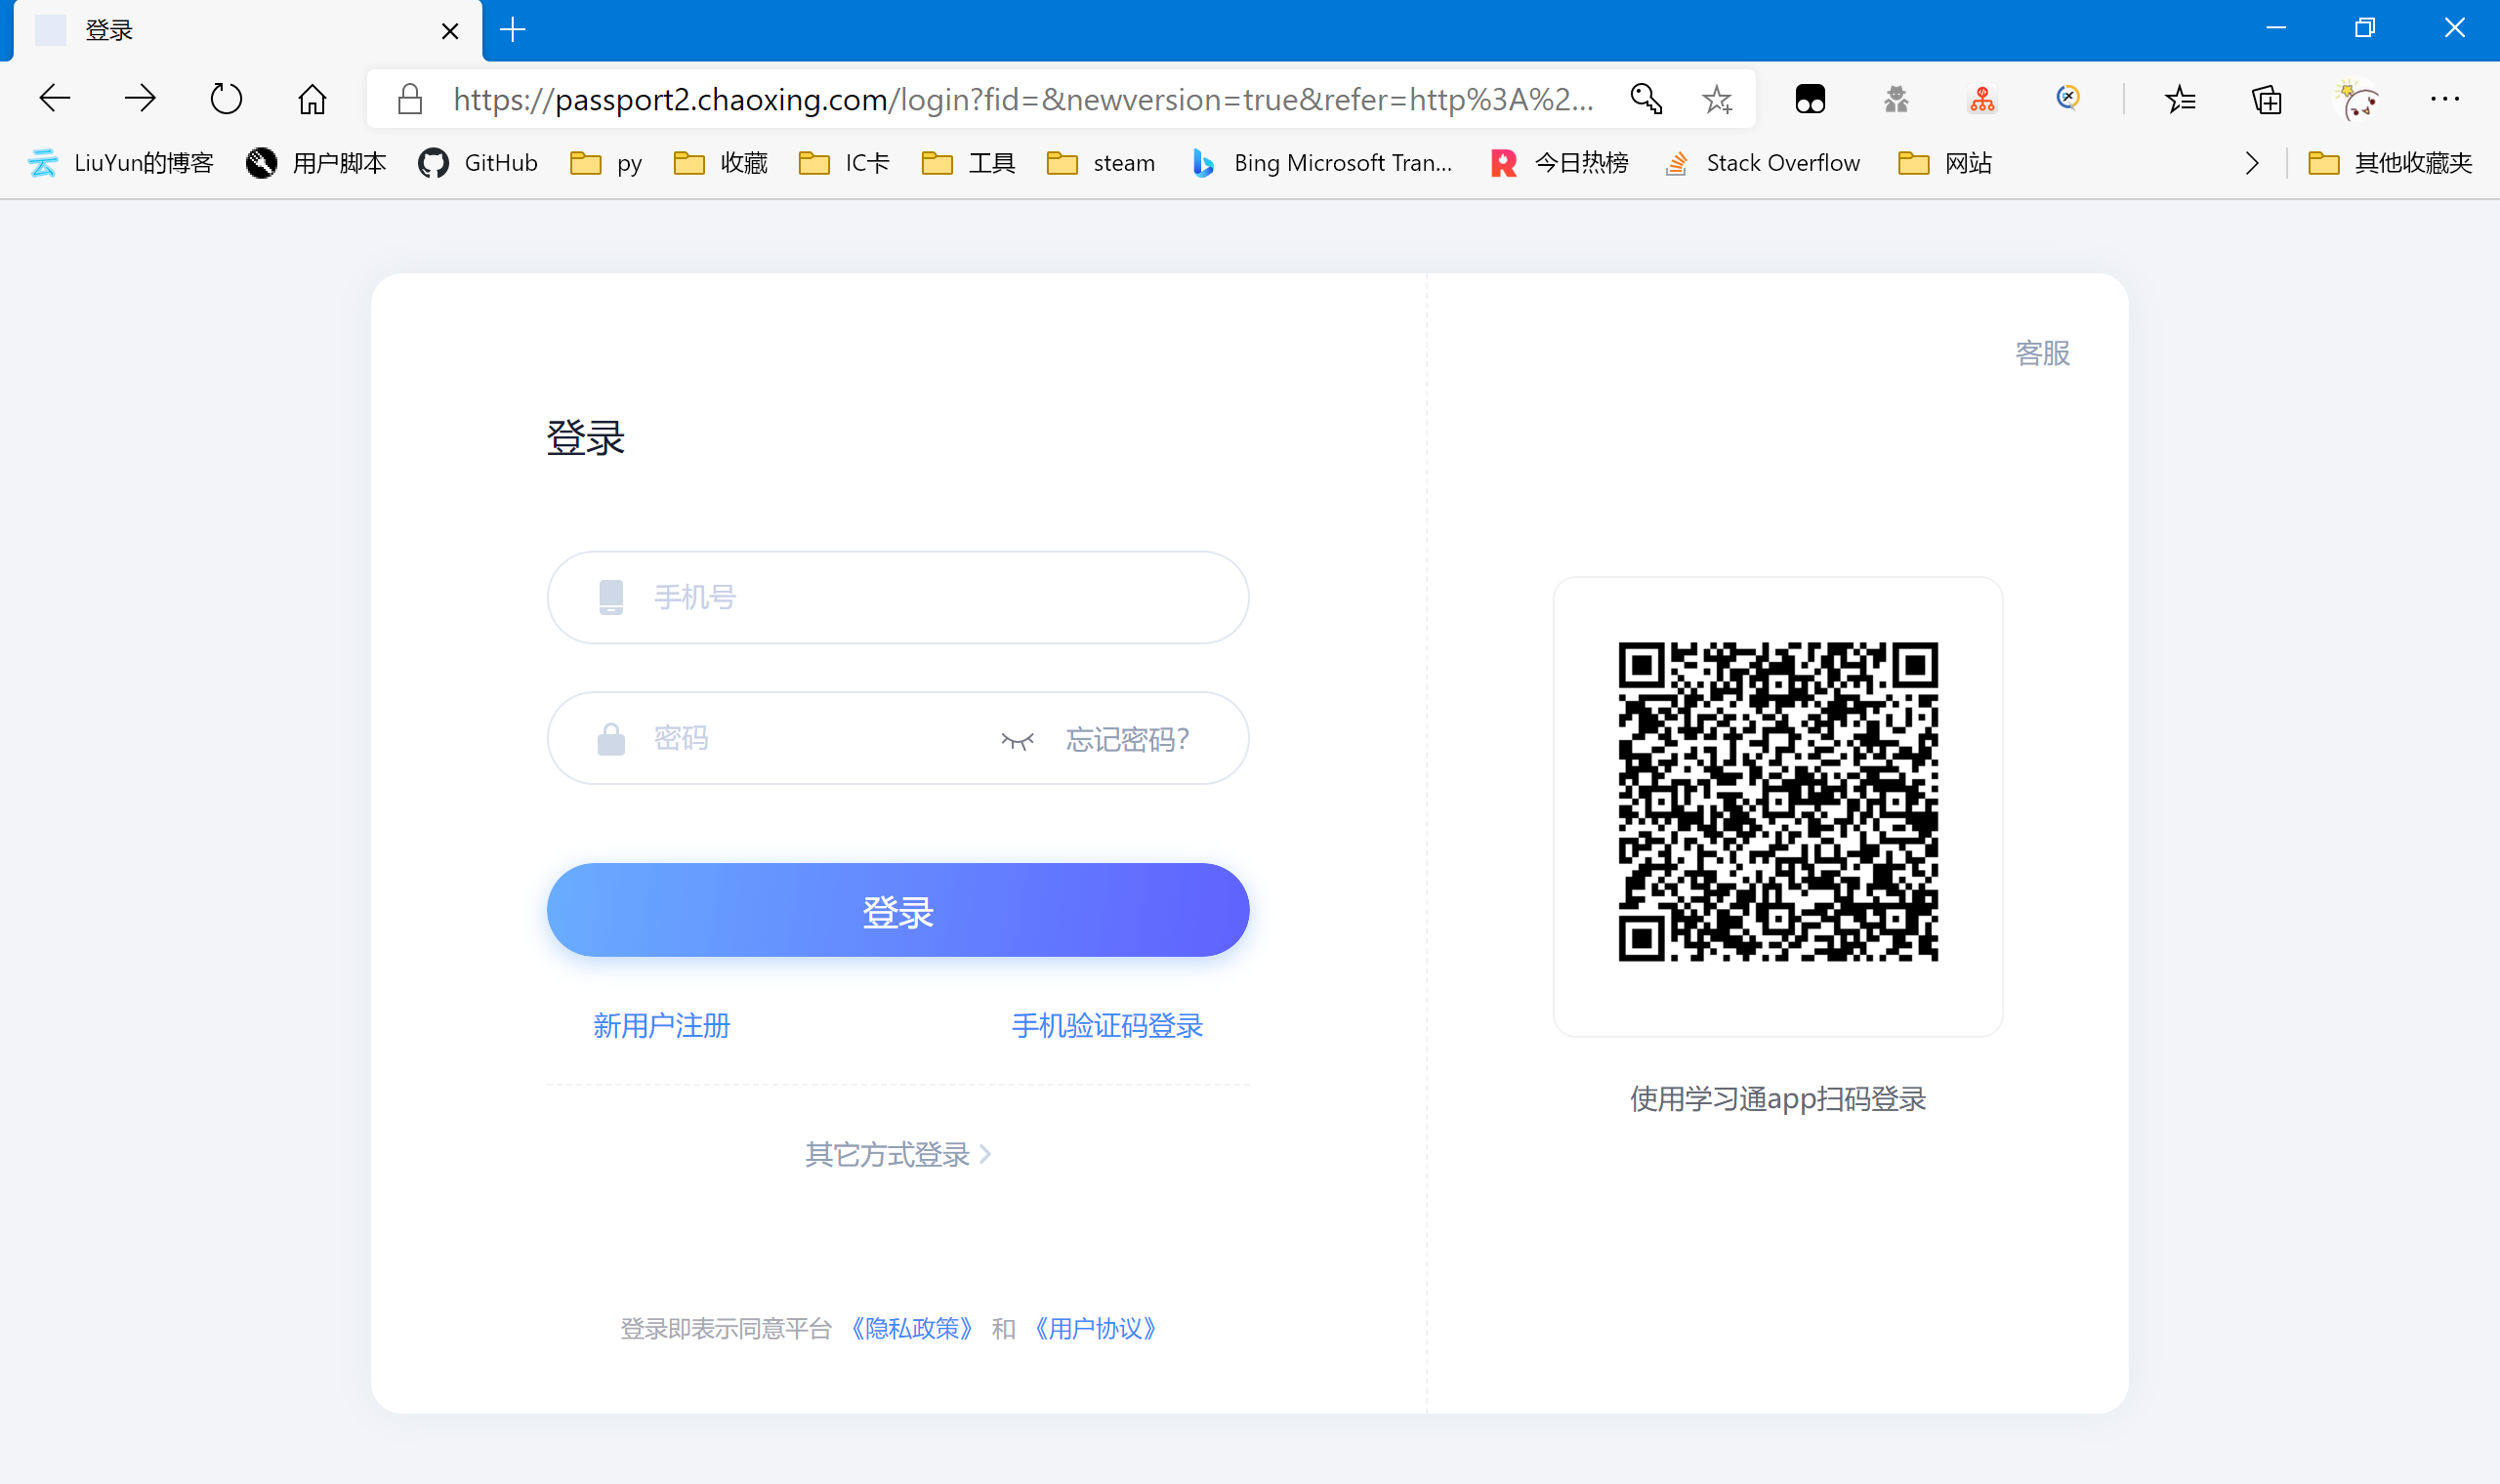 Resultados de búsqueda para: '﻿﻿lbbet乐博综合app>>网址▷139KK.Bet▷手输<<lbbet 乐博综合app>>网址▷139KK.Bet▷手输<<lbbet乐博综合app.c